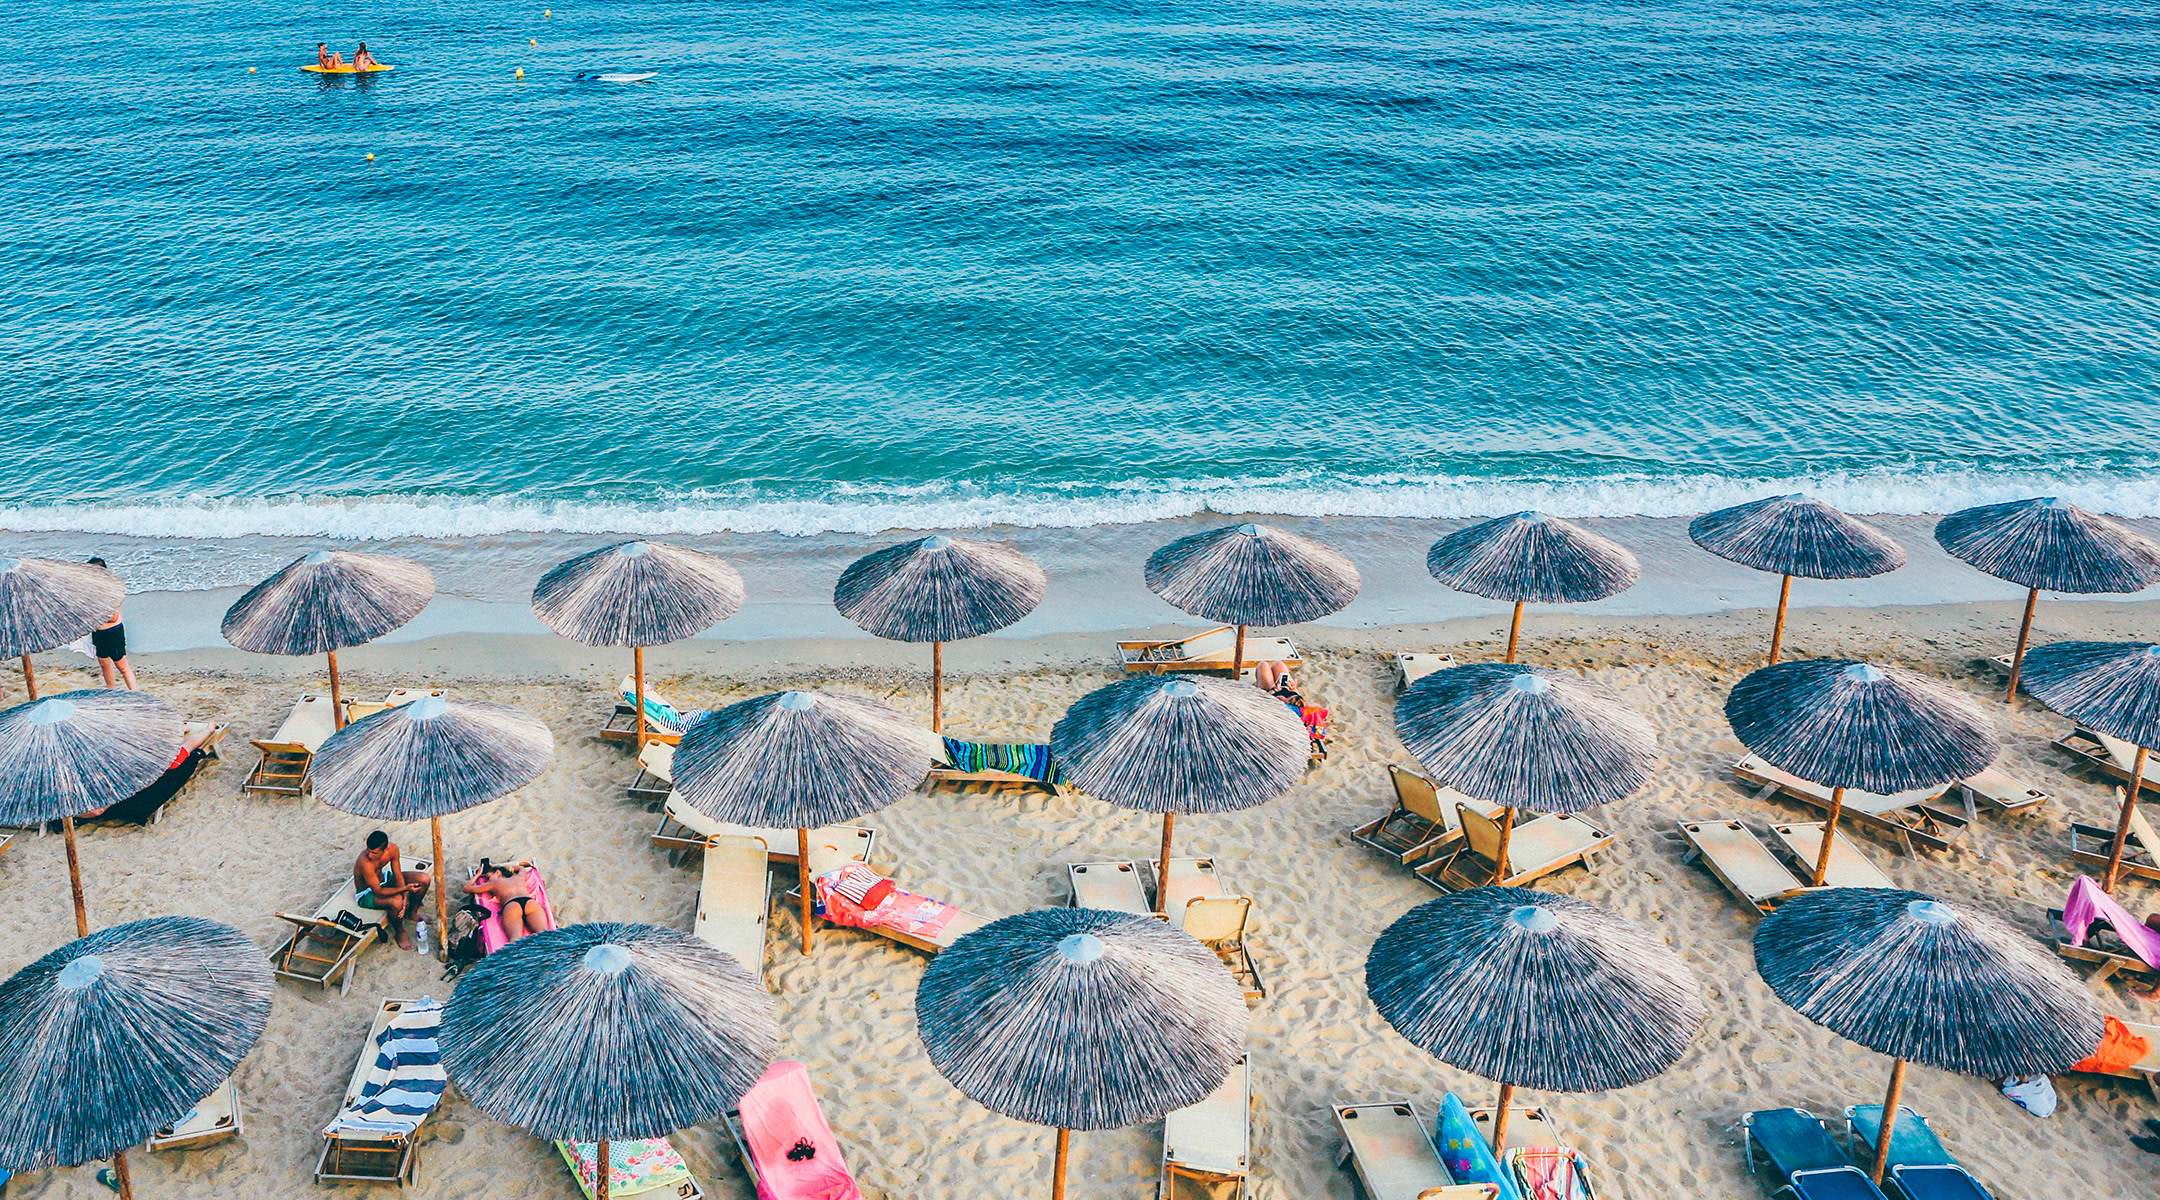 Umbrellas on a beach